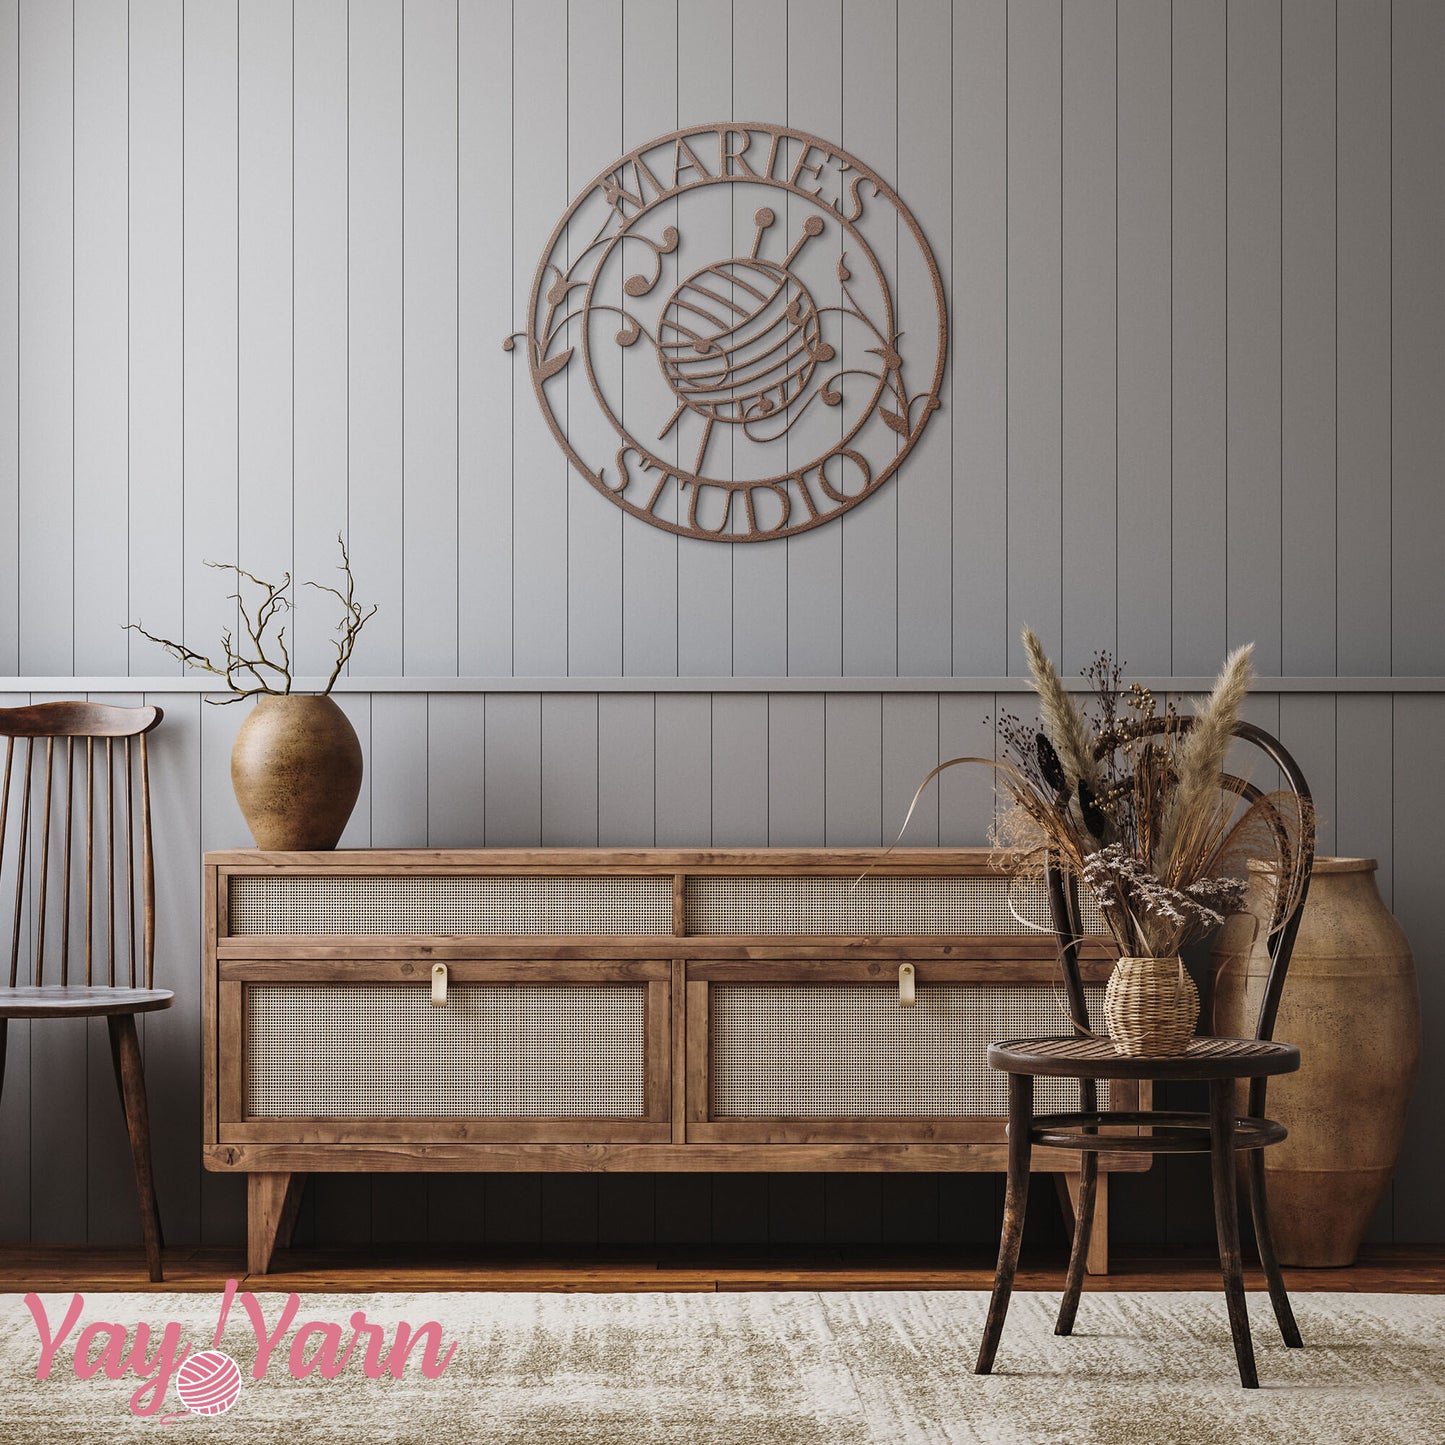 Knitting Studio Metal Wall Art Personalized Copper on Grey Wall Boho Living Room